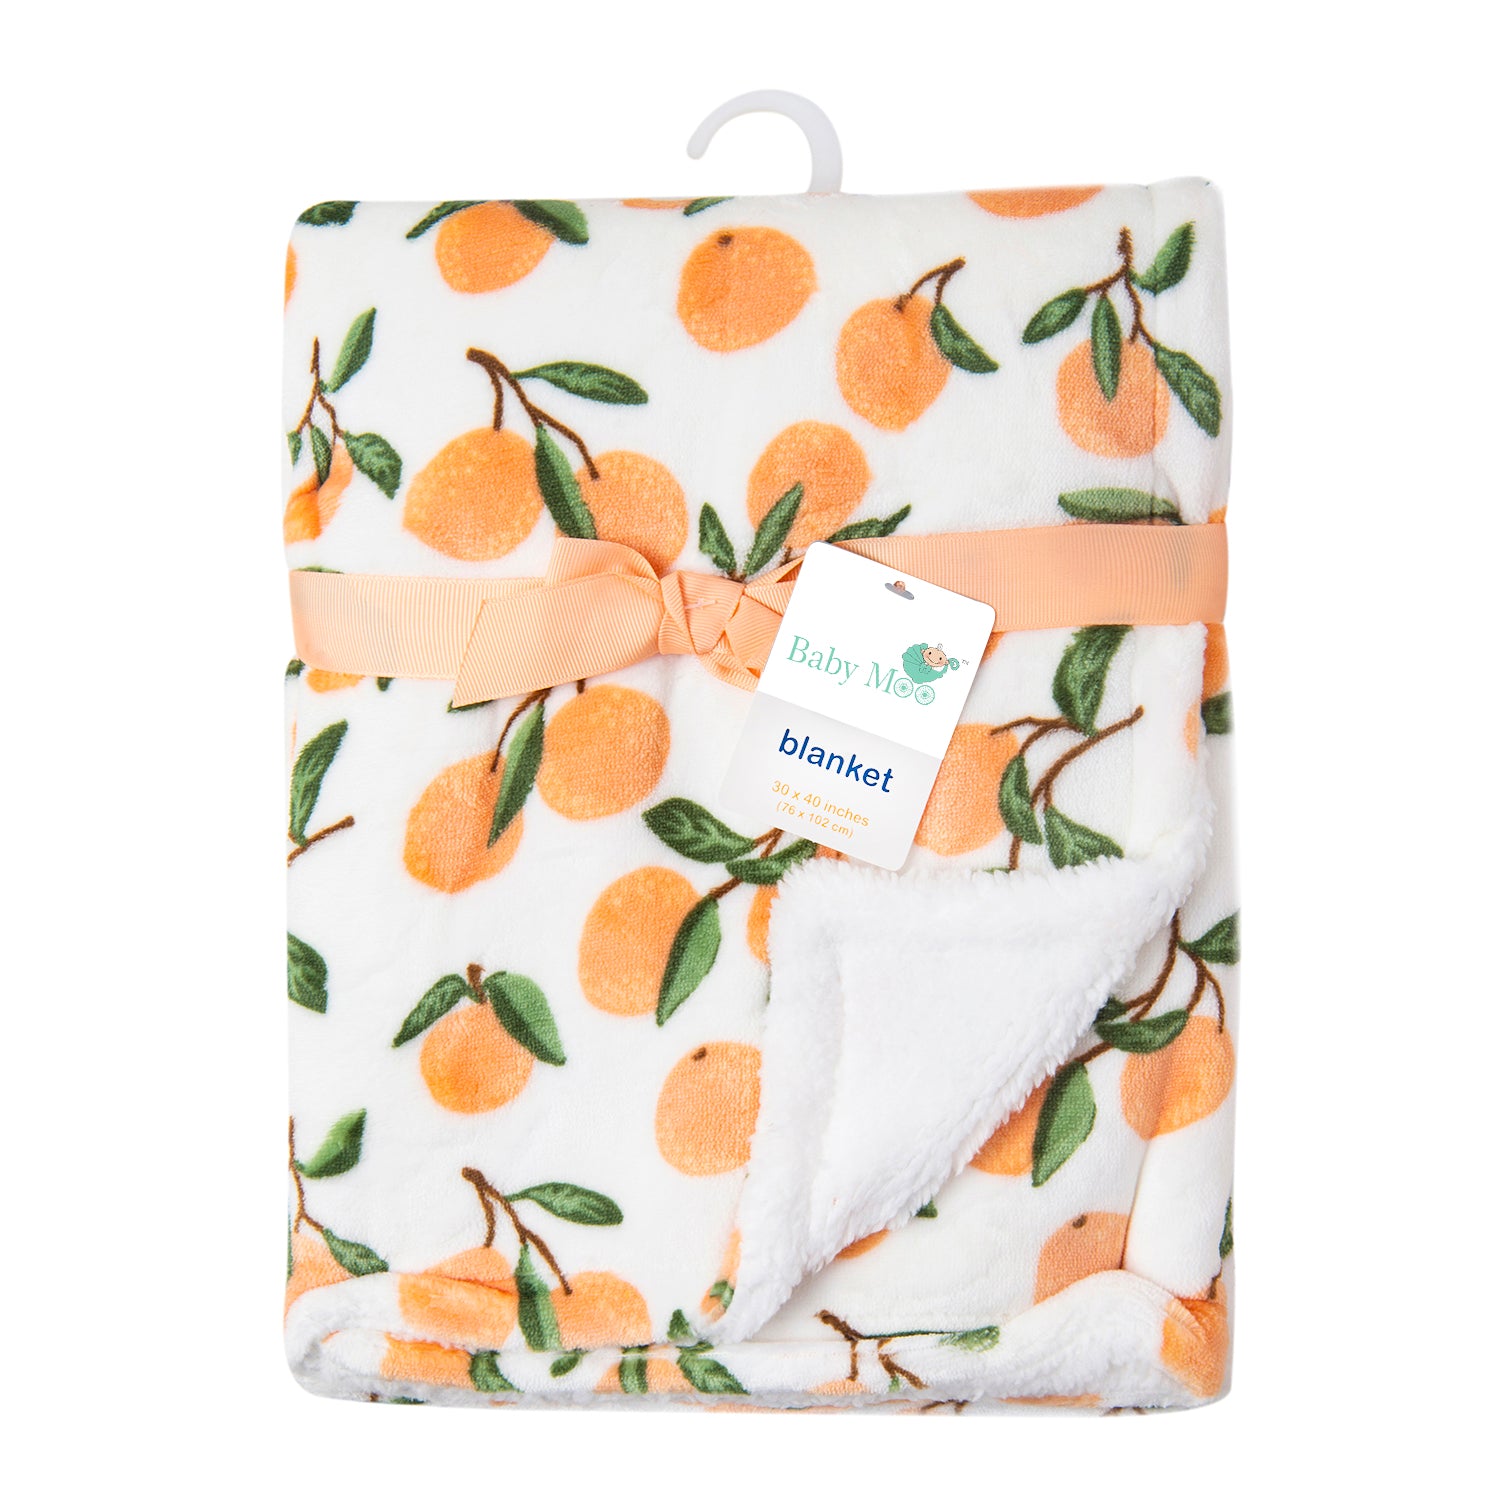 Fruity Soft Cozy Plush Blanket Orange - Baby Moo